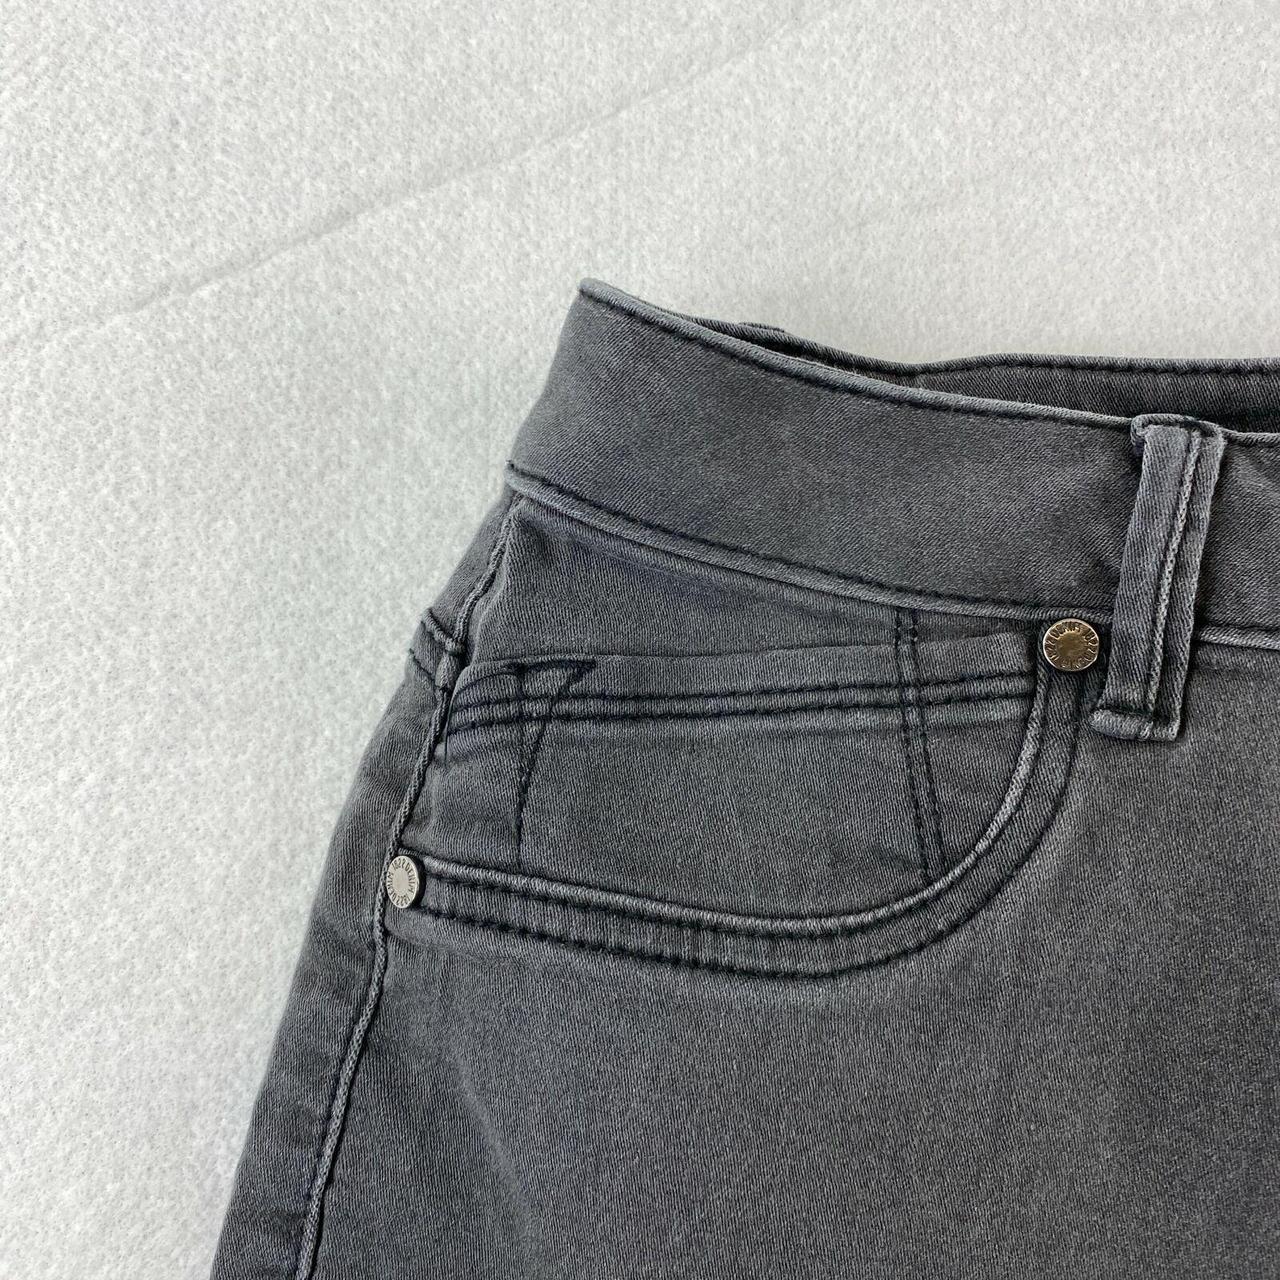 1822 Denim Skinny Jeans Women's 16W Gray Charcoal... - Depop